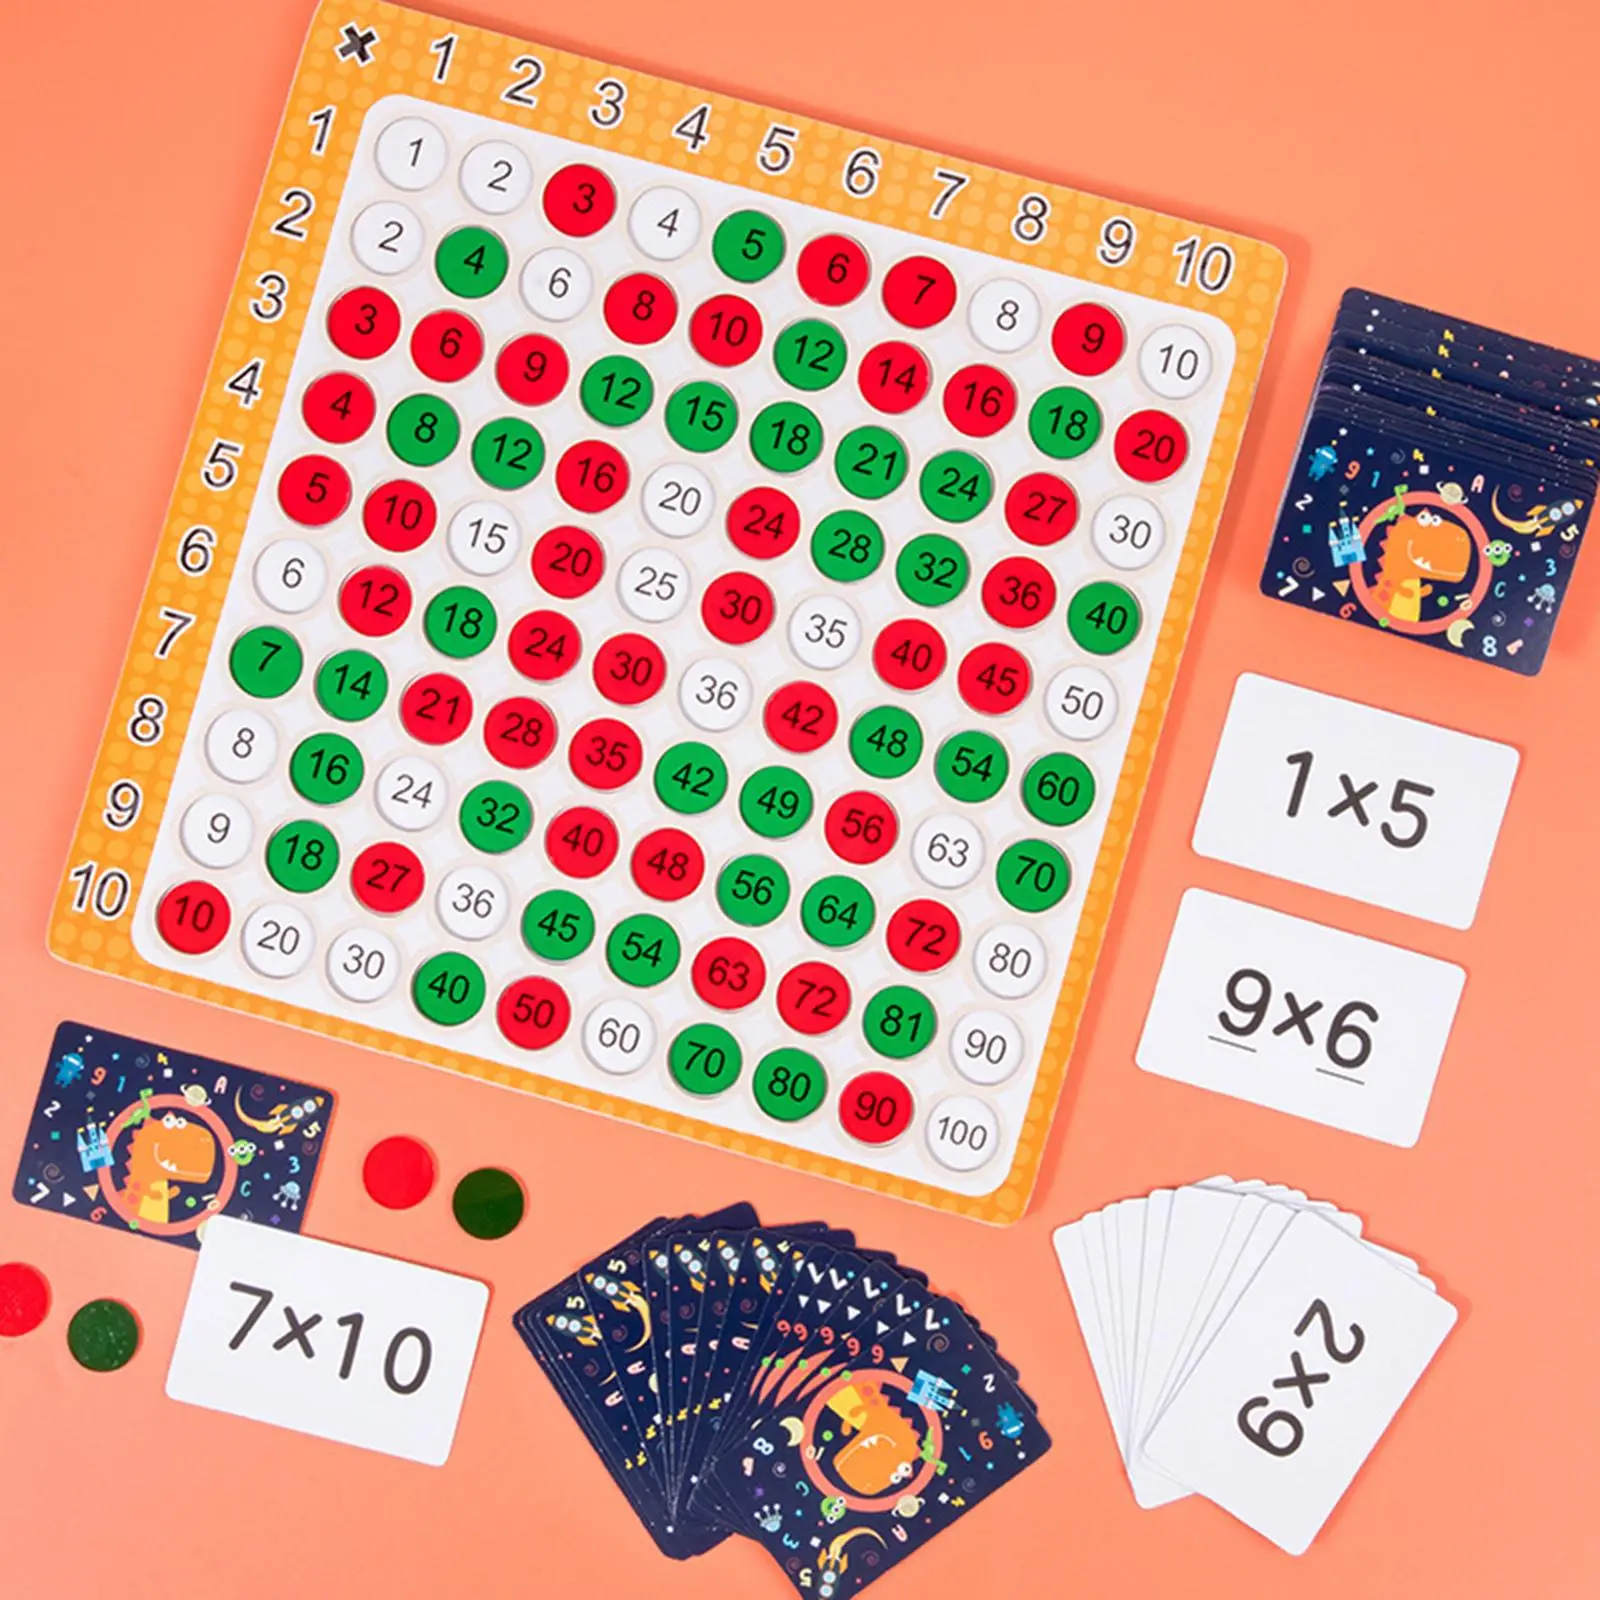 99 Multiplication Table Math Toy Educational for Children Toddler Girls Boys